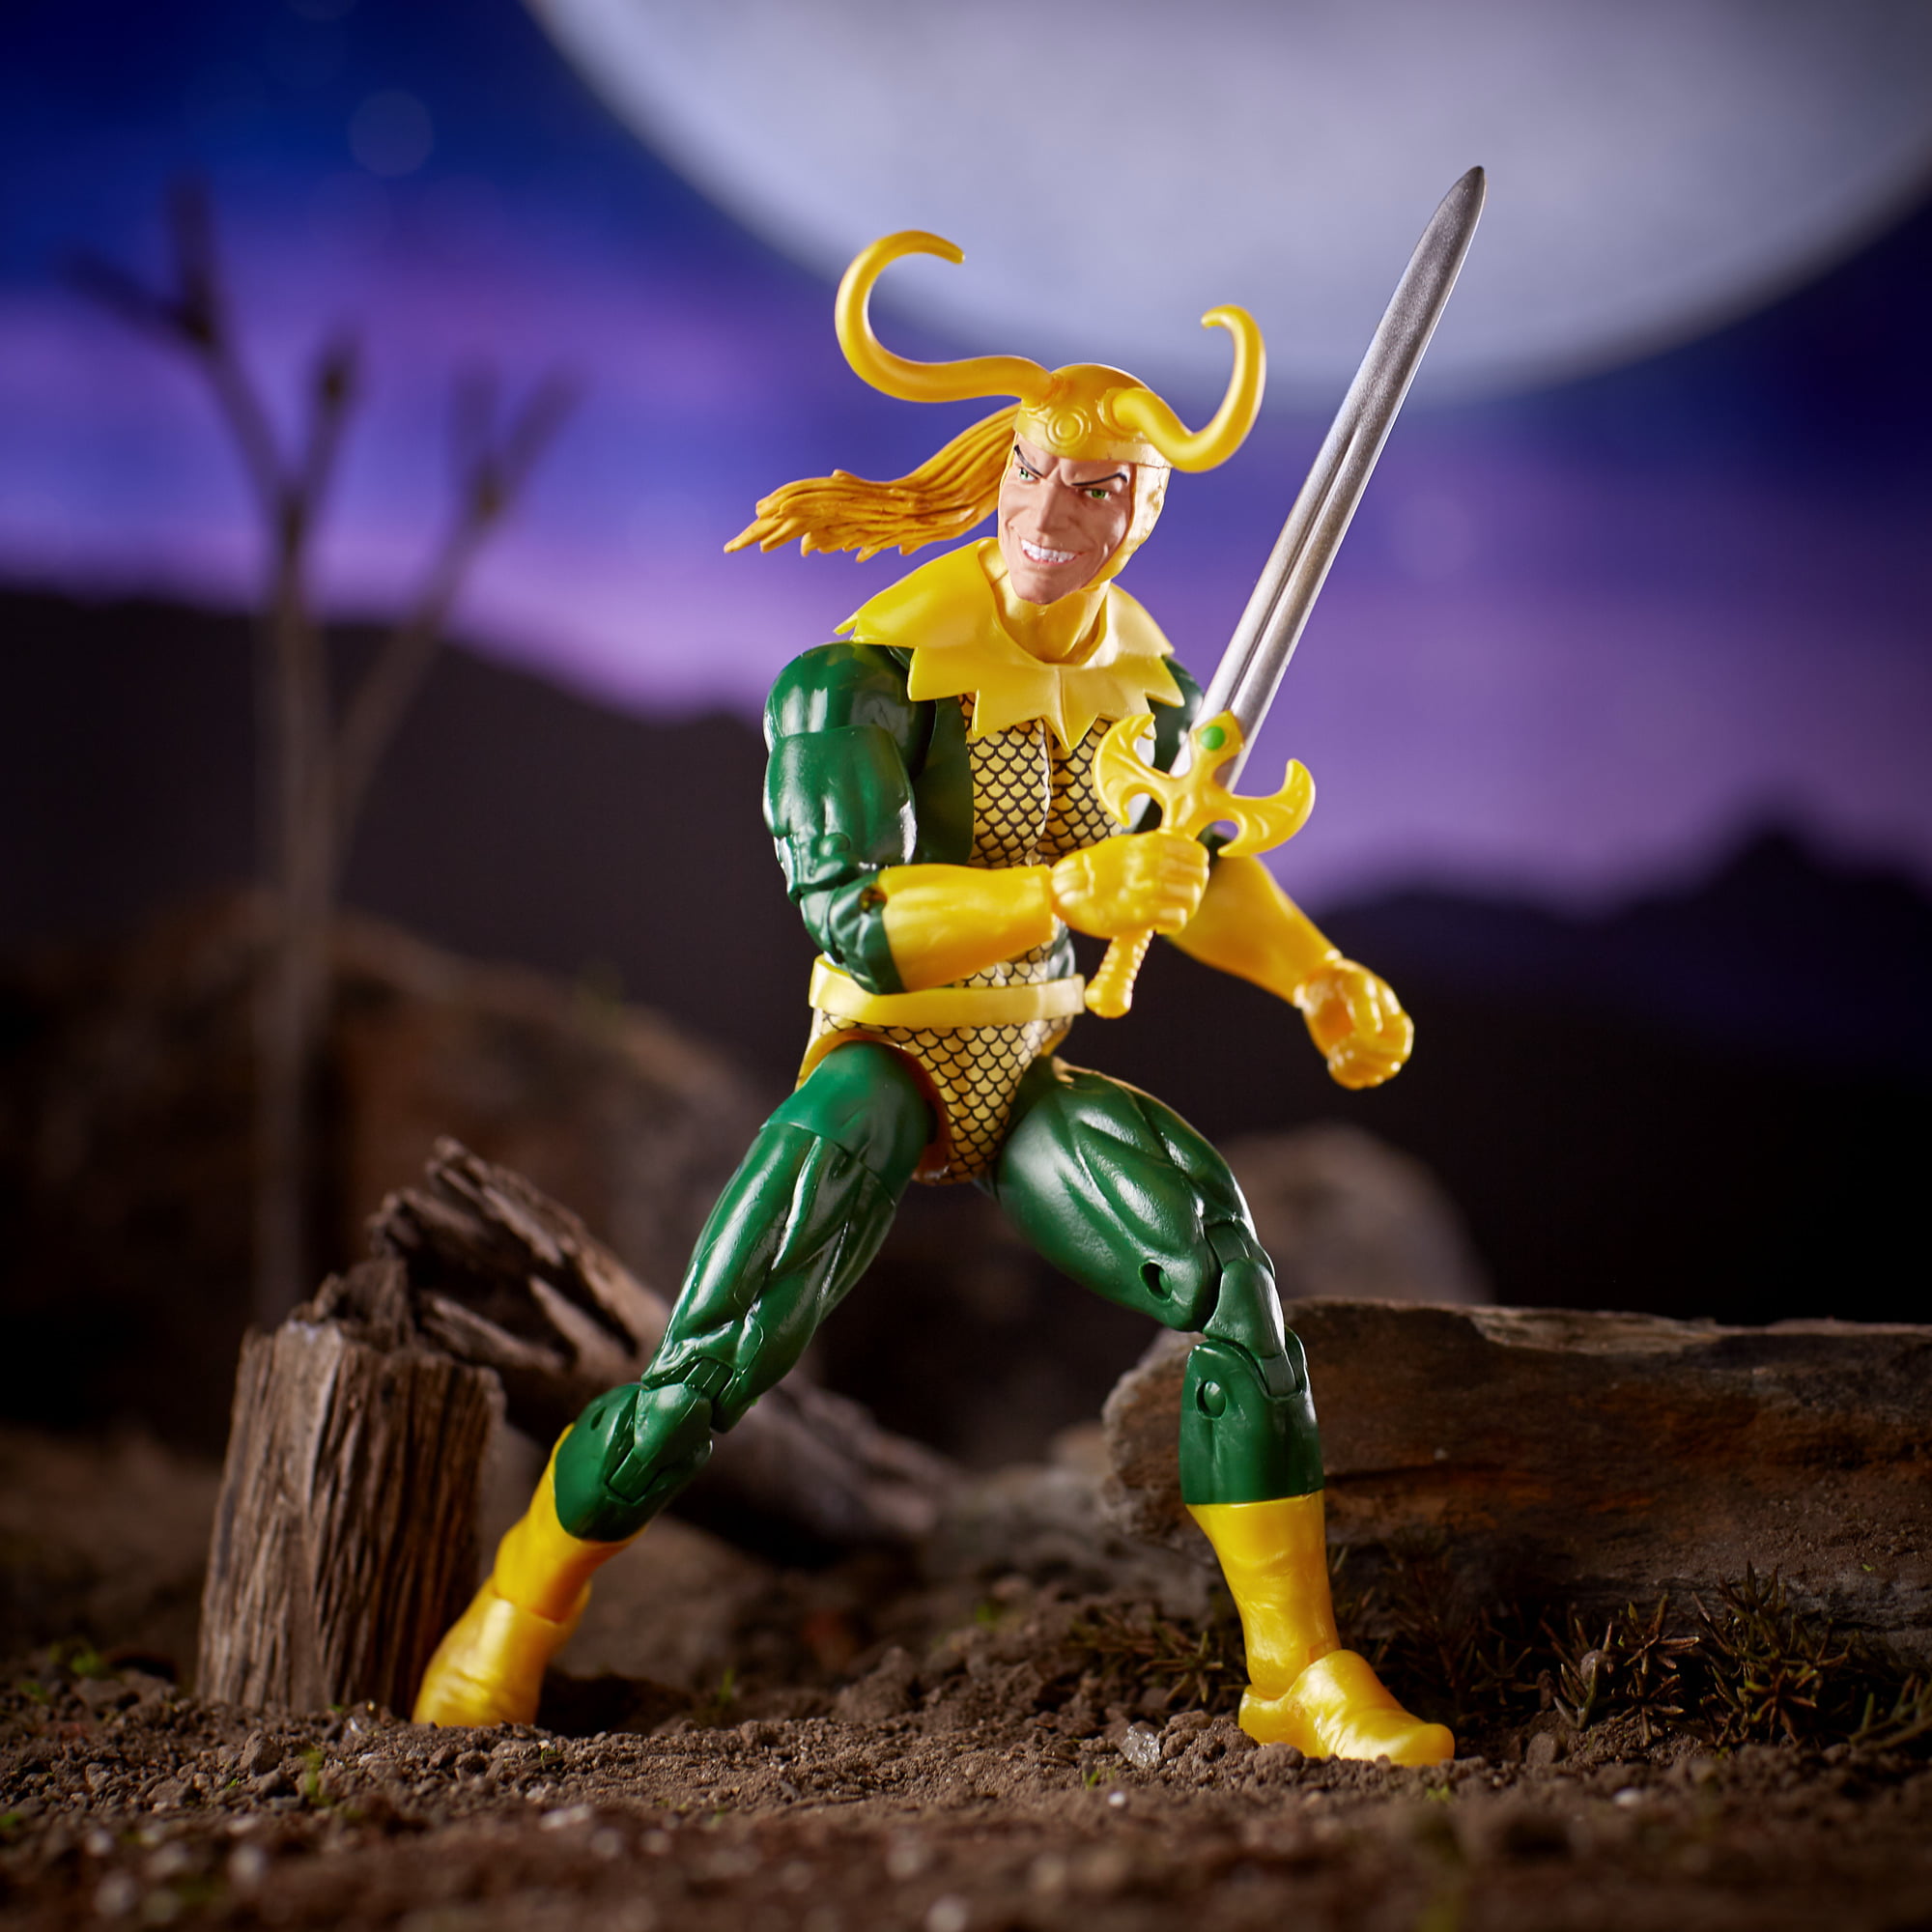 Marvel Legends Series Avengers 6-inch Loki Action Figure - Walmart.com